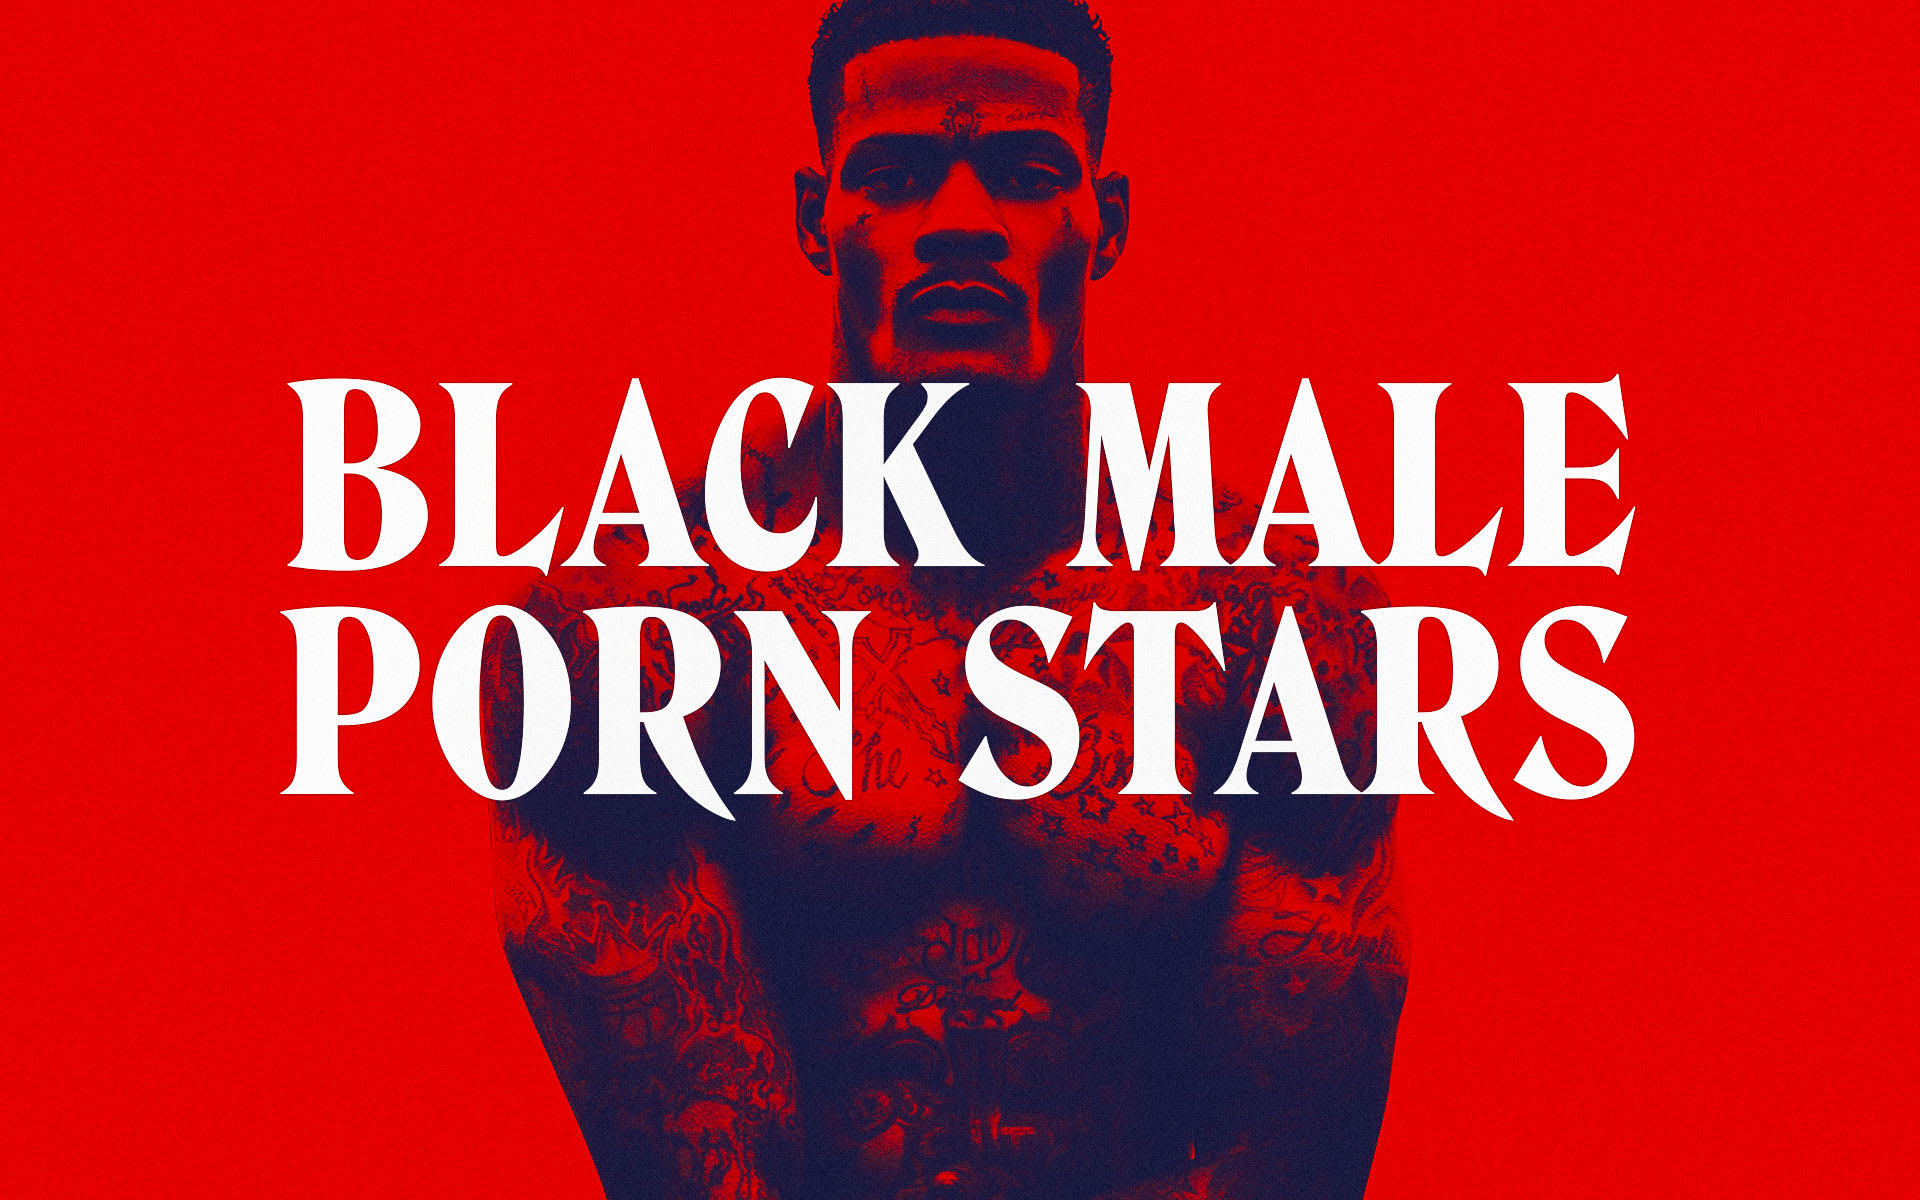 Short Black Straight Male Porn Stars - Hottest Black Male Porn Stars | Filthy